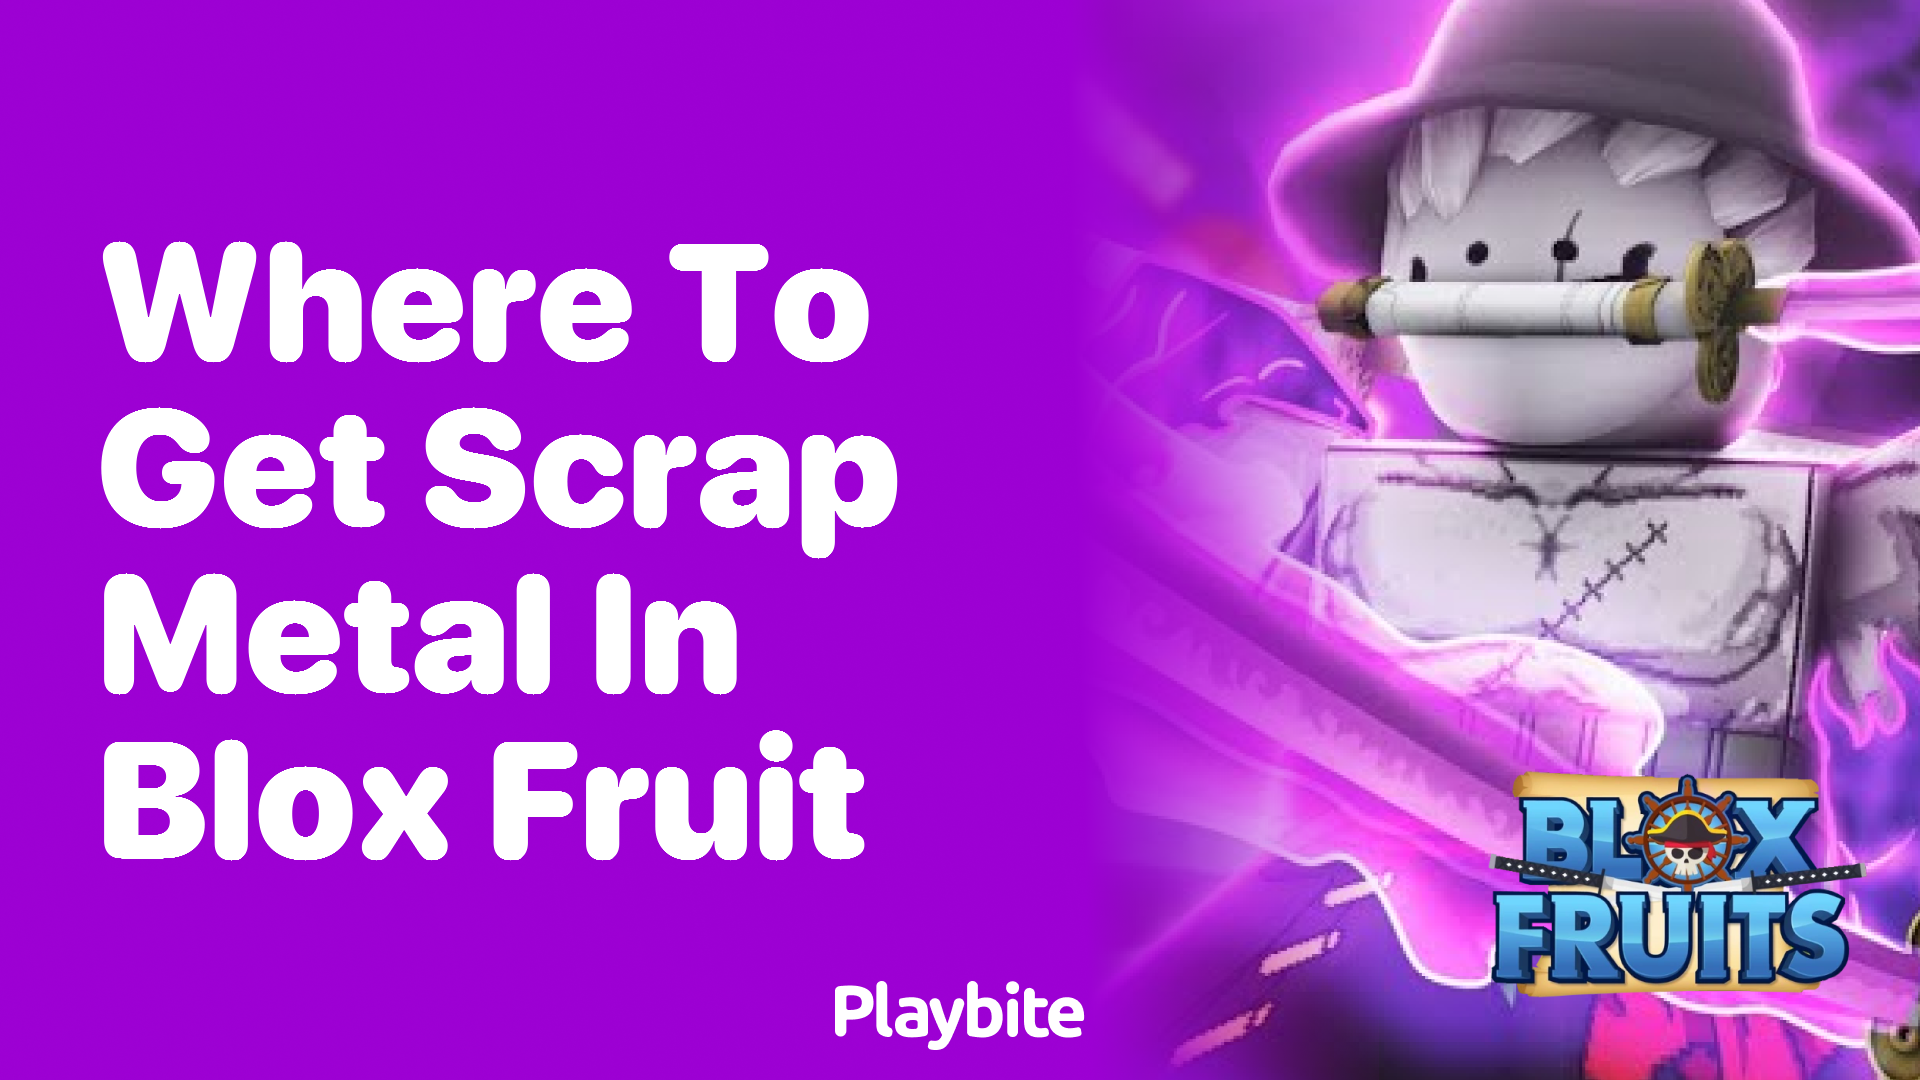 Where to Get Scrap Metal in Blox Fruit